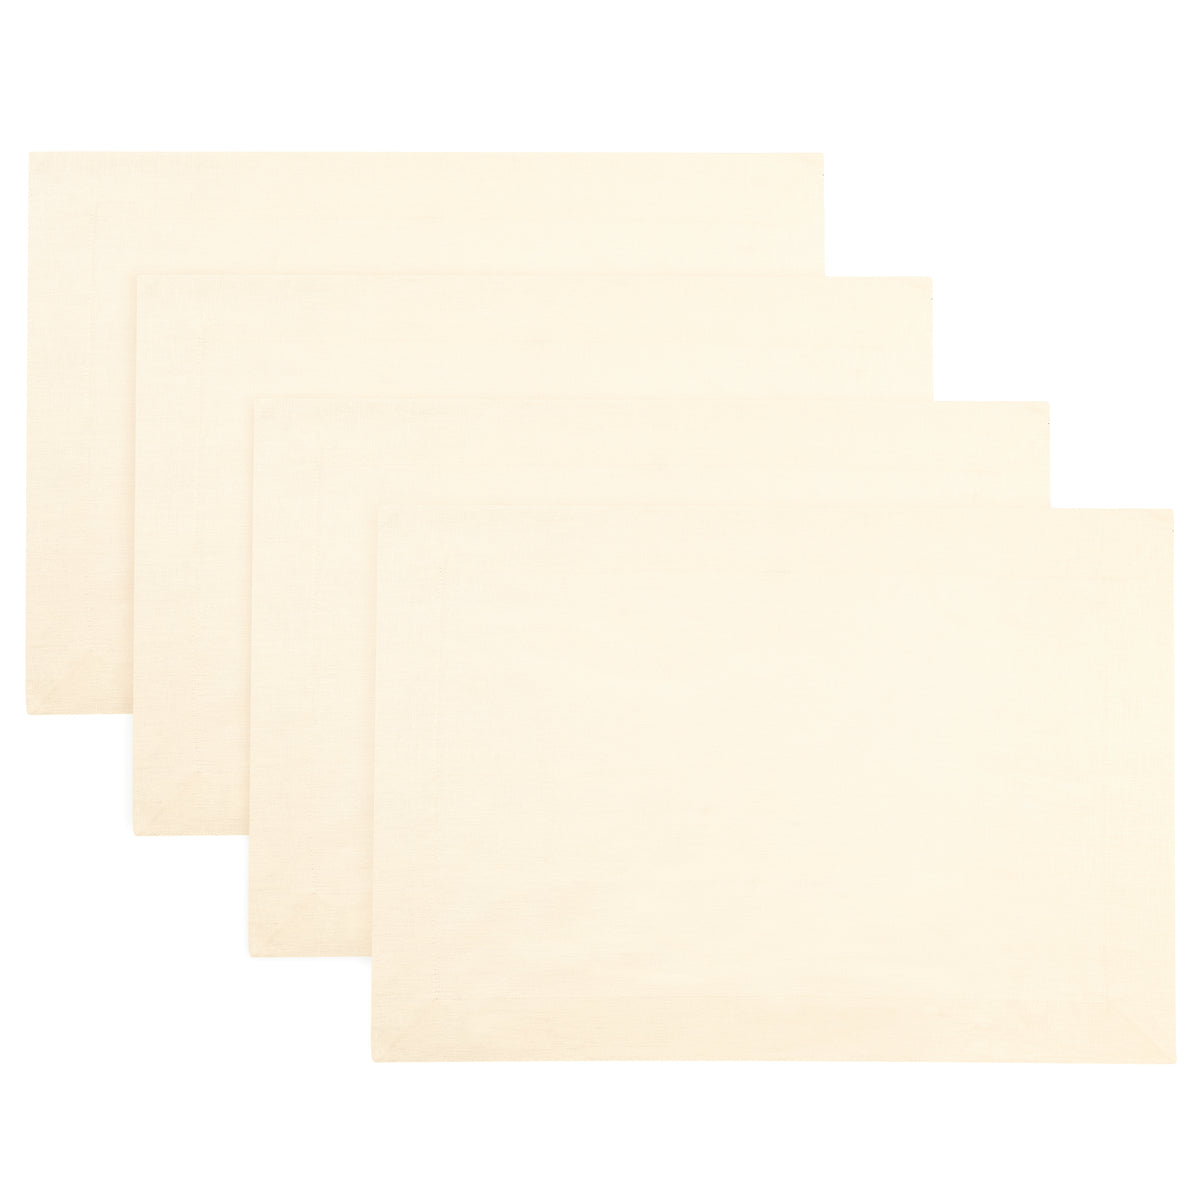 Vanilla Cream Linen Placemats 14 x 19 Inch Set of 4 - Hemmed